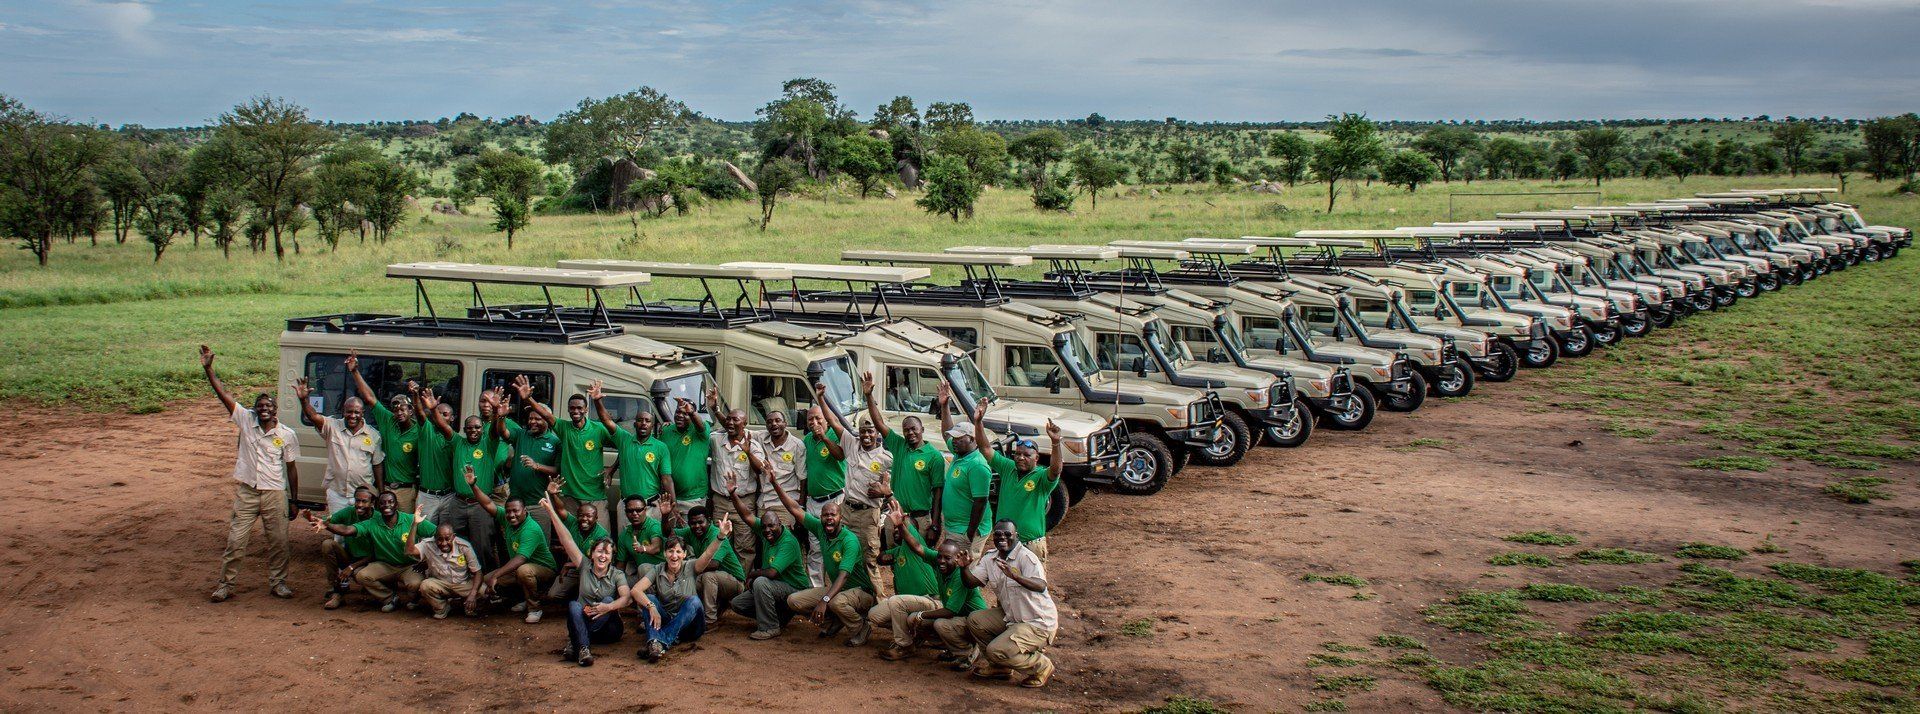 Predator Safari Club Fleet and Guides